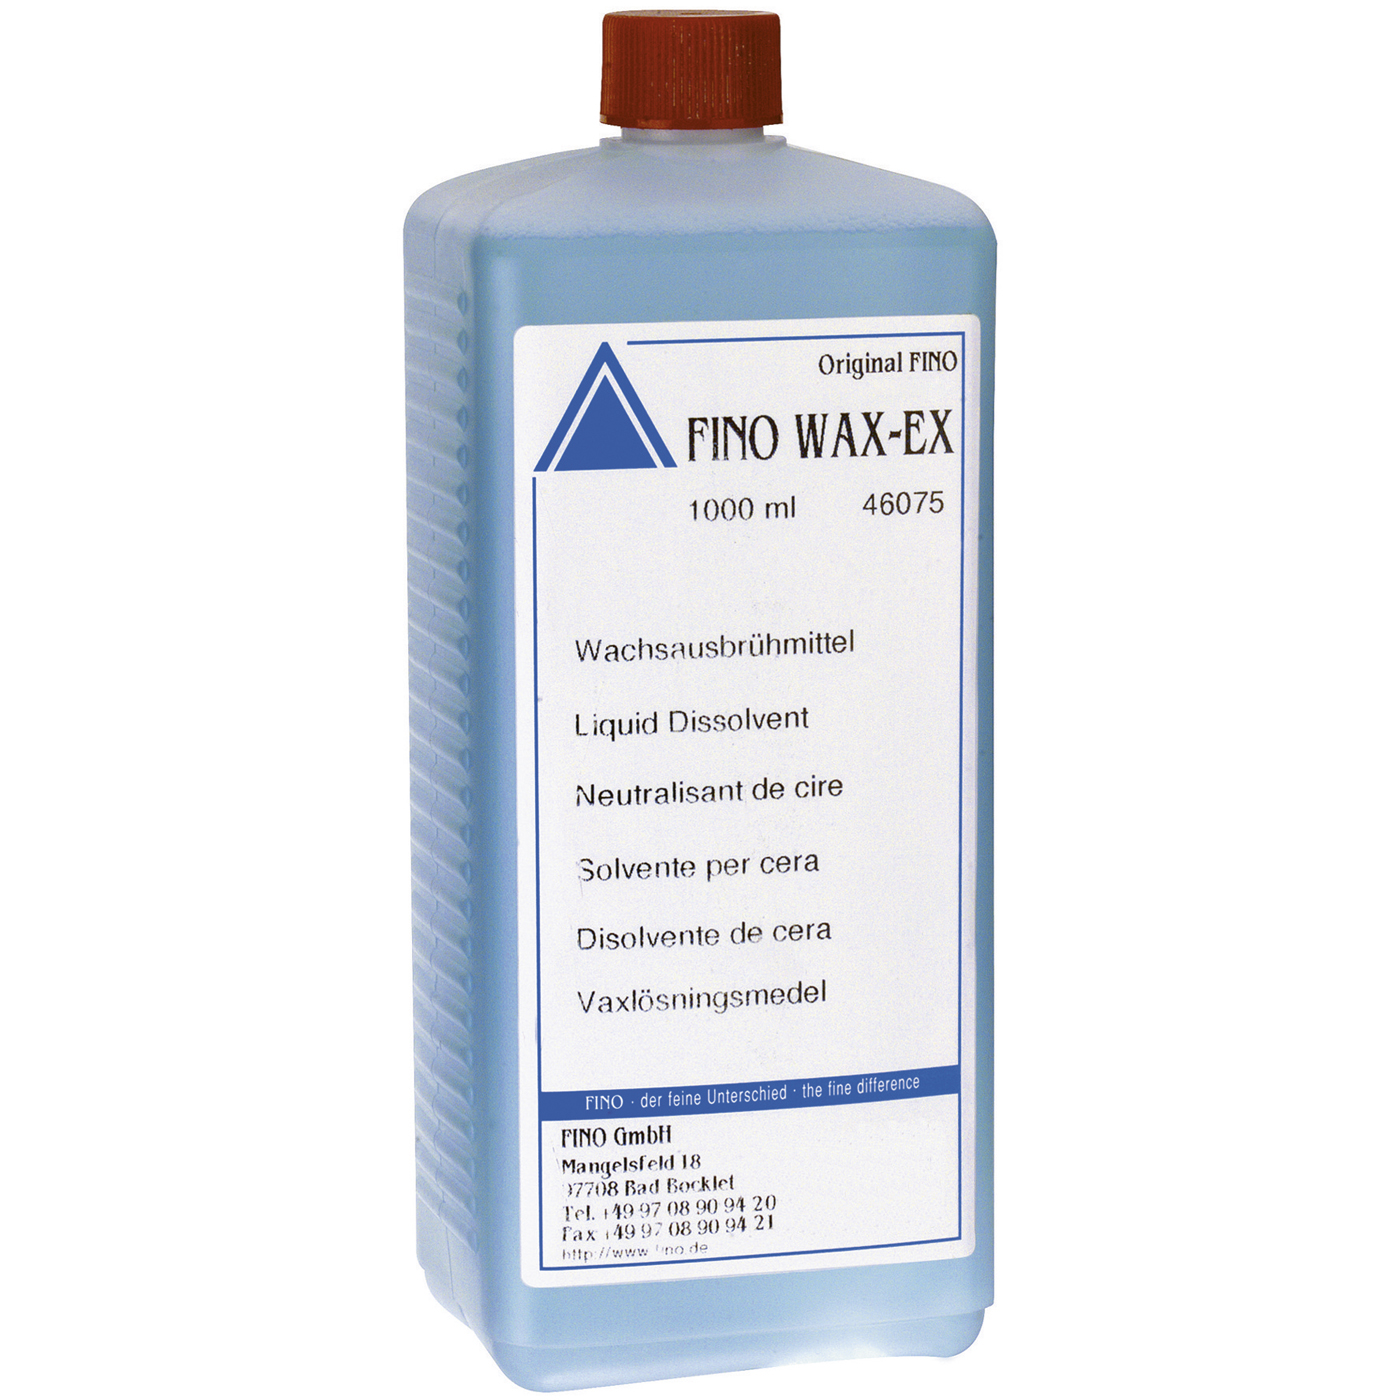 FINO WAX-EX Wax Scalding Agent - 1000 ml